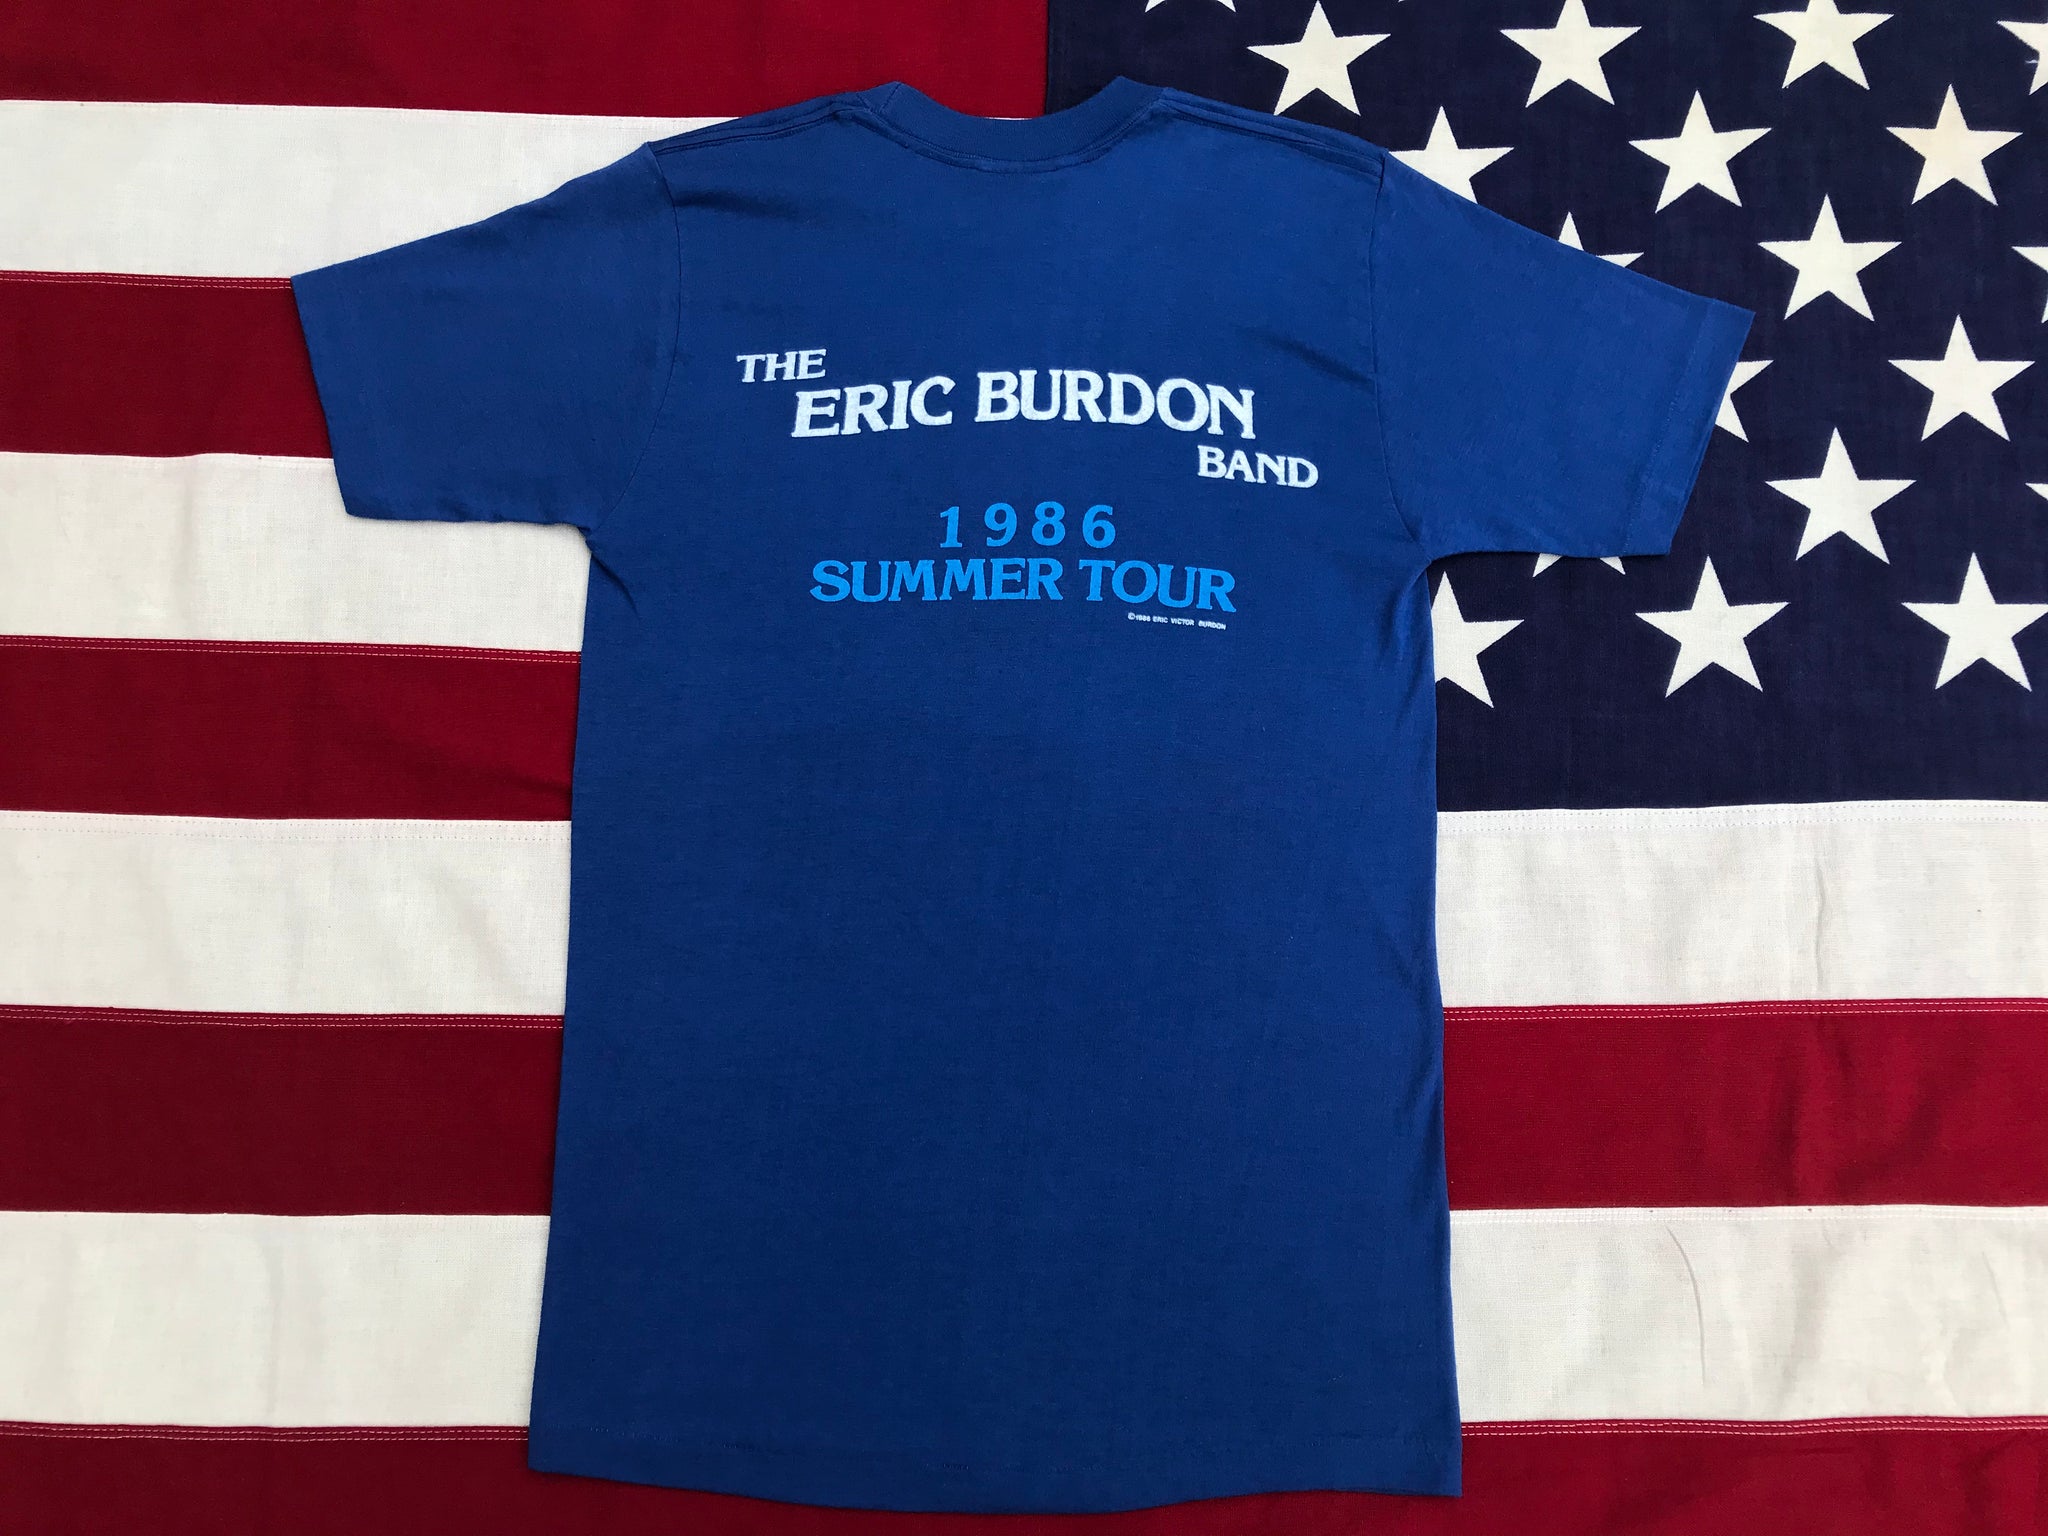 Eric Burdon  “ The Eric Burdon Band 1986 Summer Tour “ Original Vintage Rock T-Shirt by Sneakers Made in USA